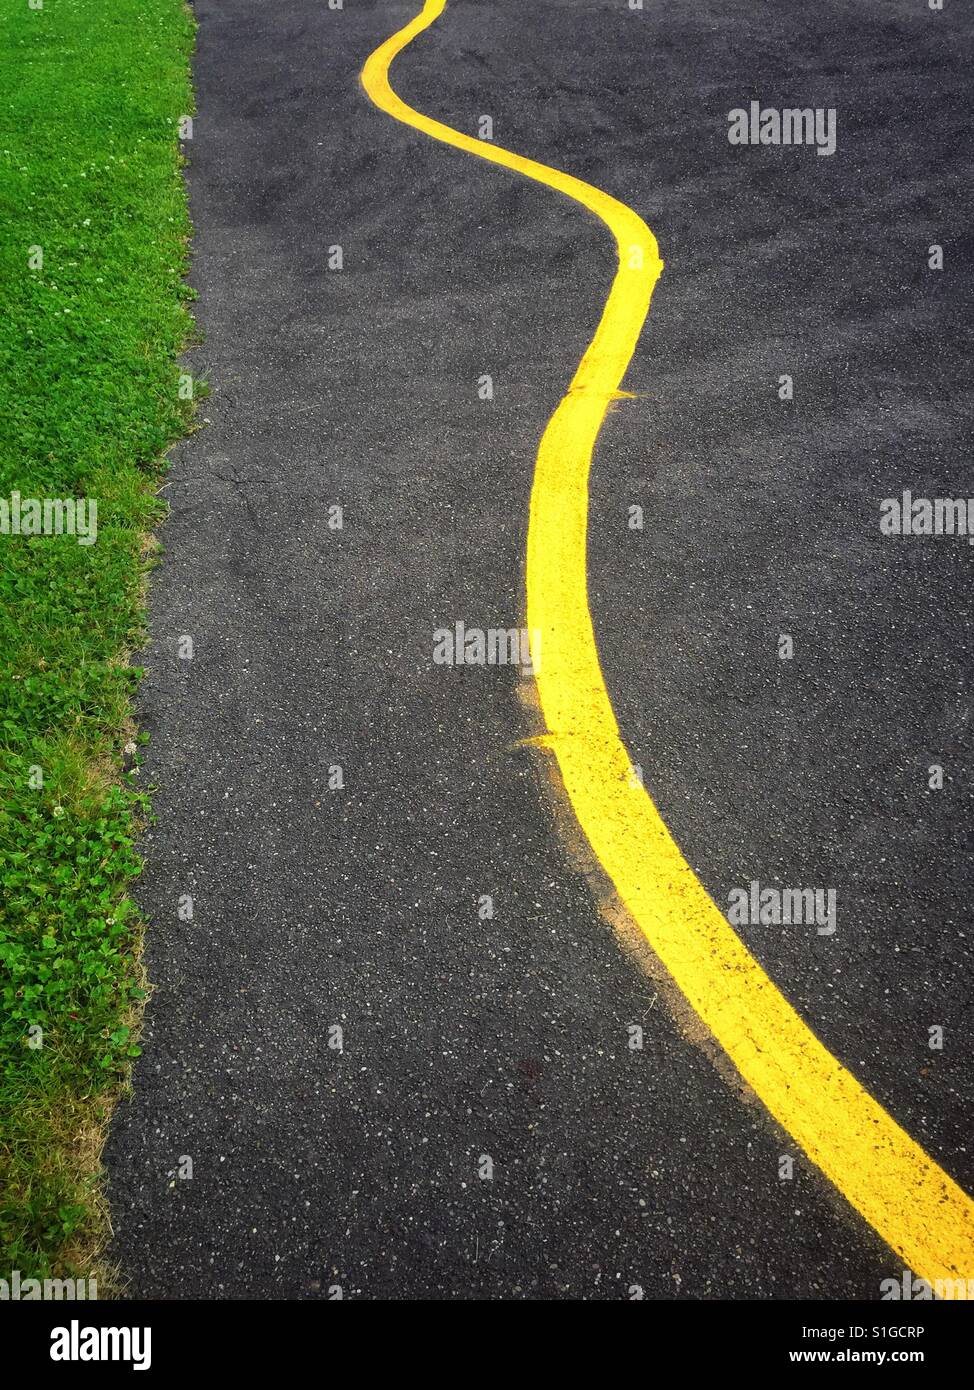 Un giallo linea curva dipinta su asfalto con un confine di erba verde Foto Stock